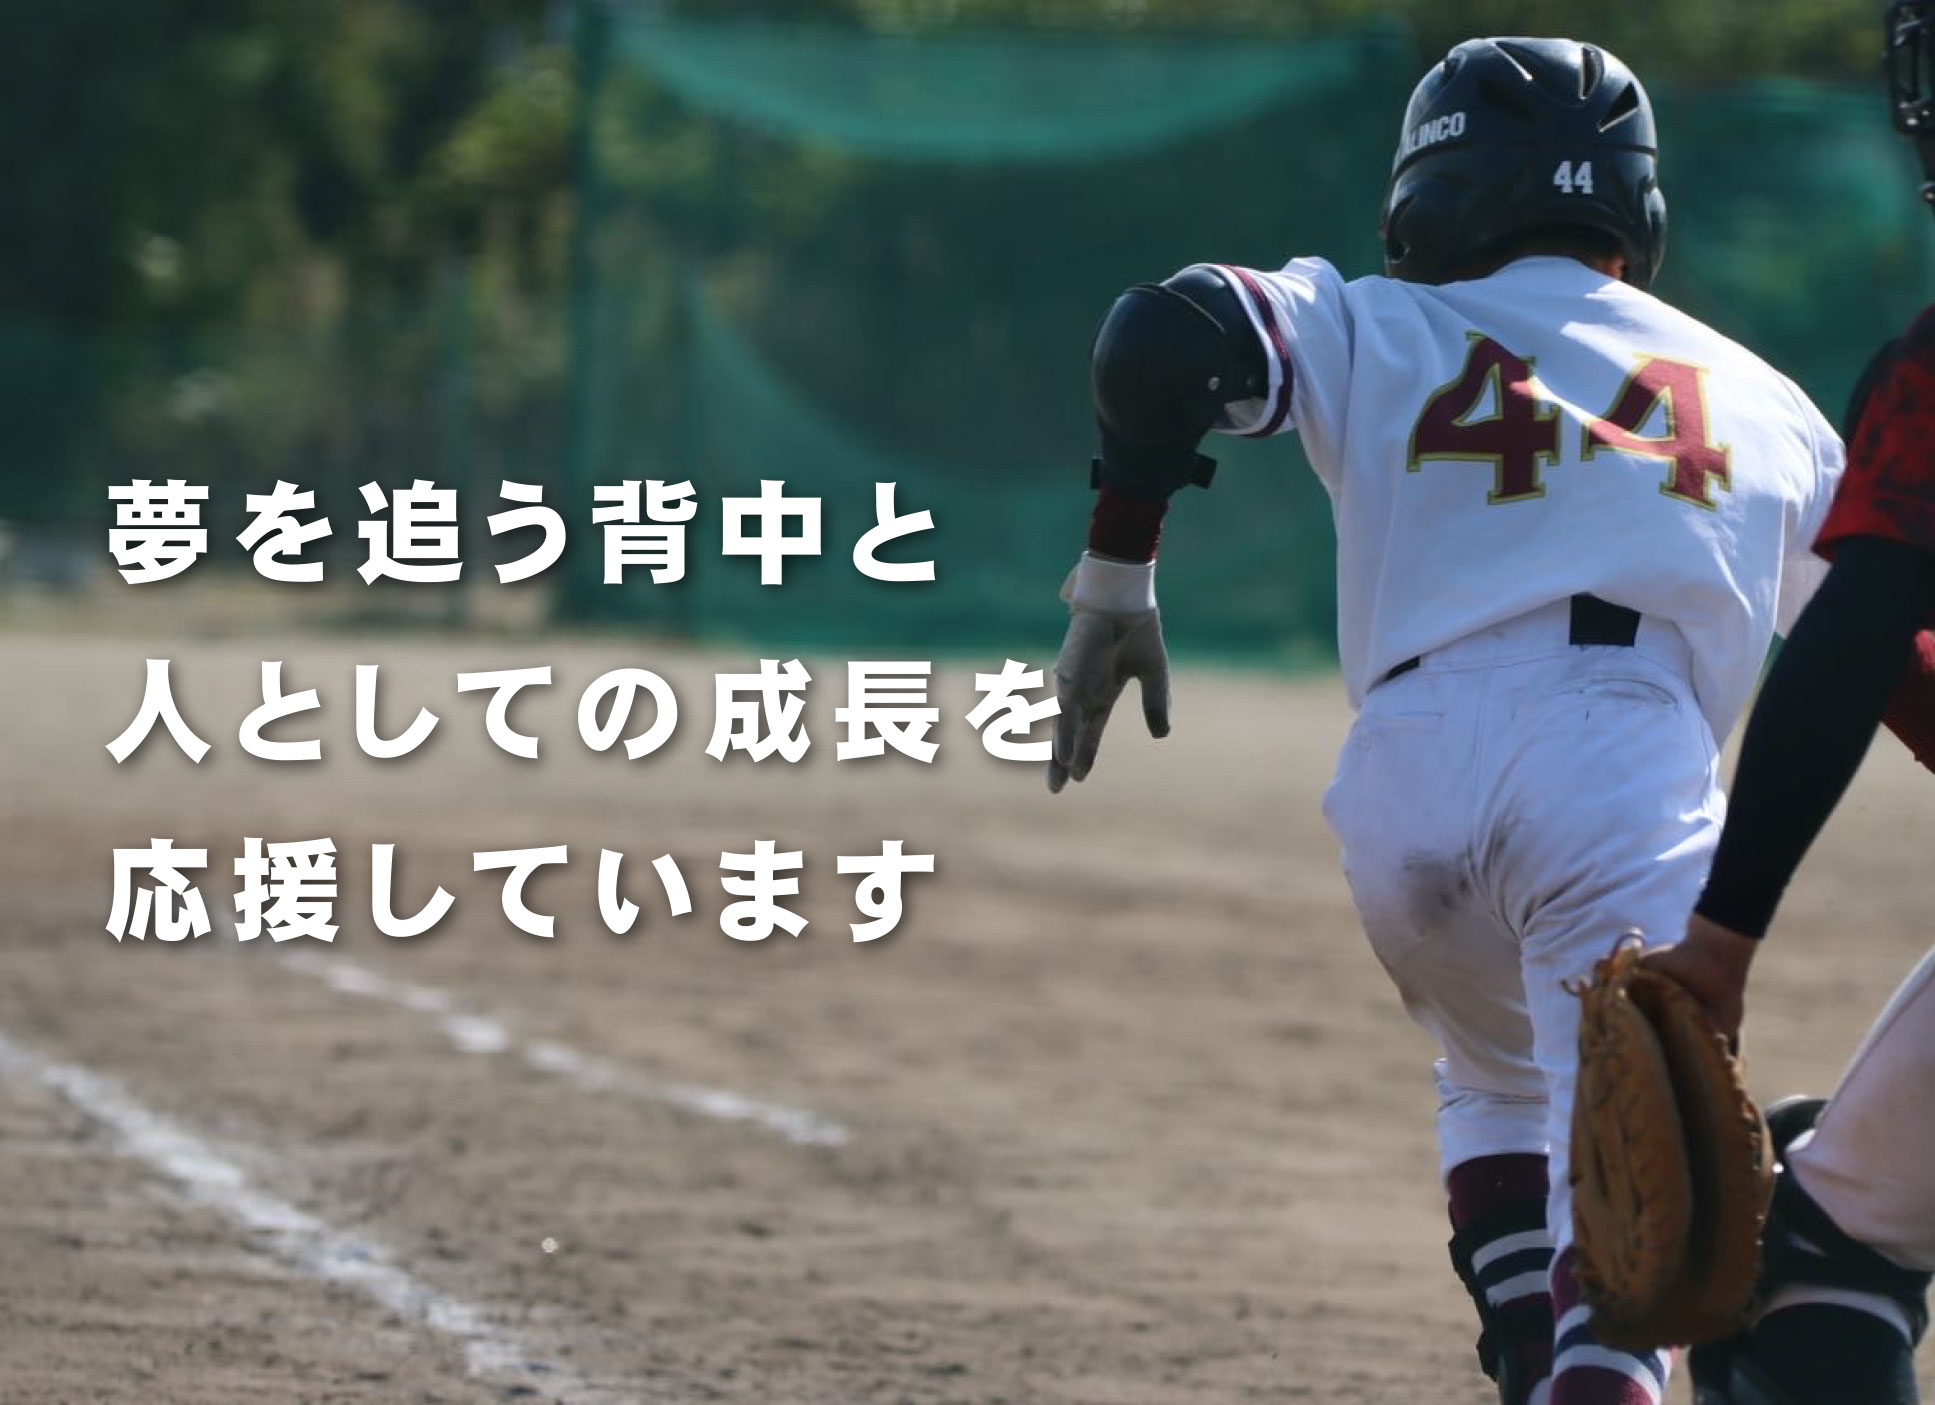 baseball-image-b-3.jpg